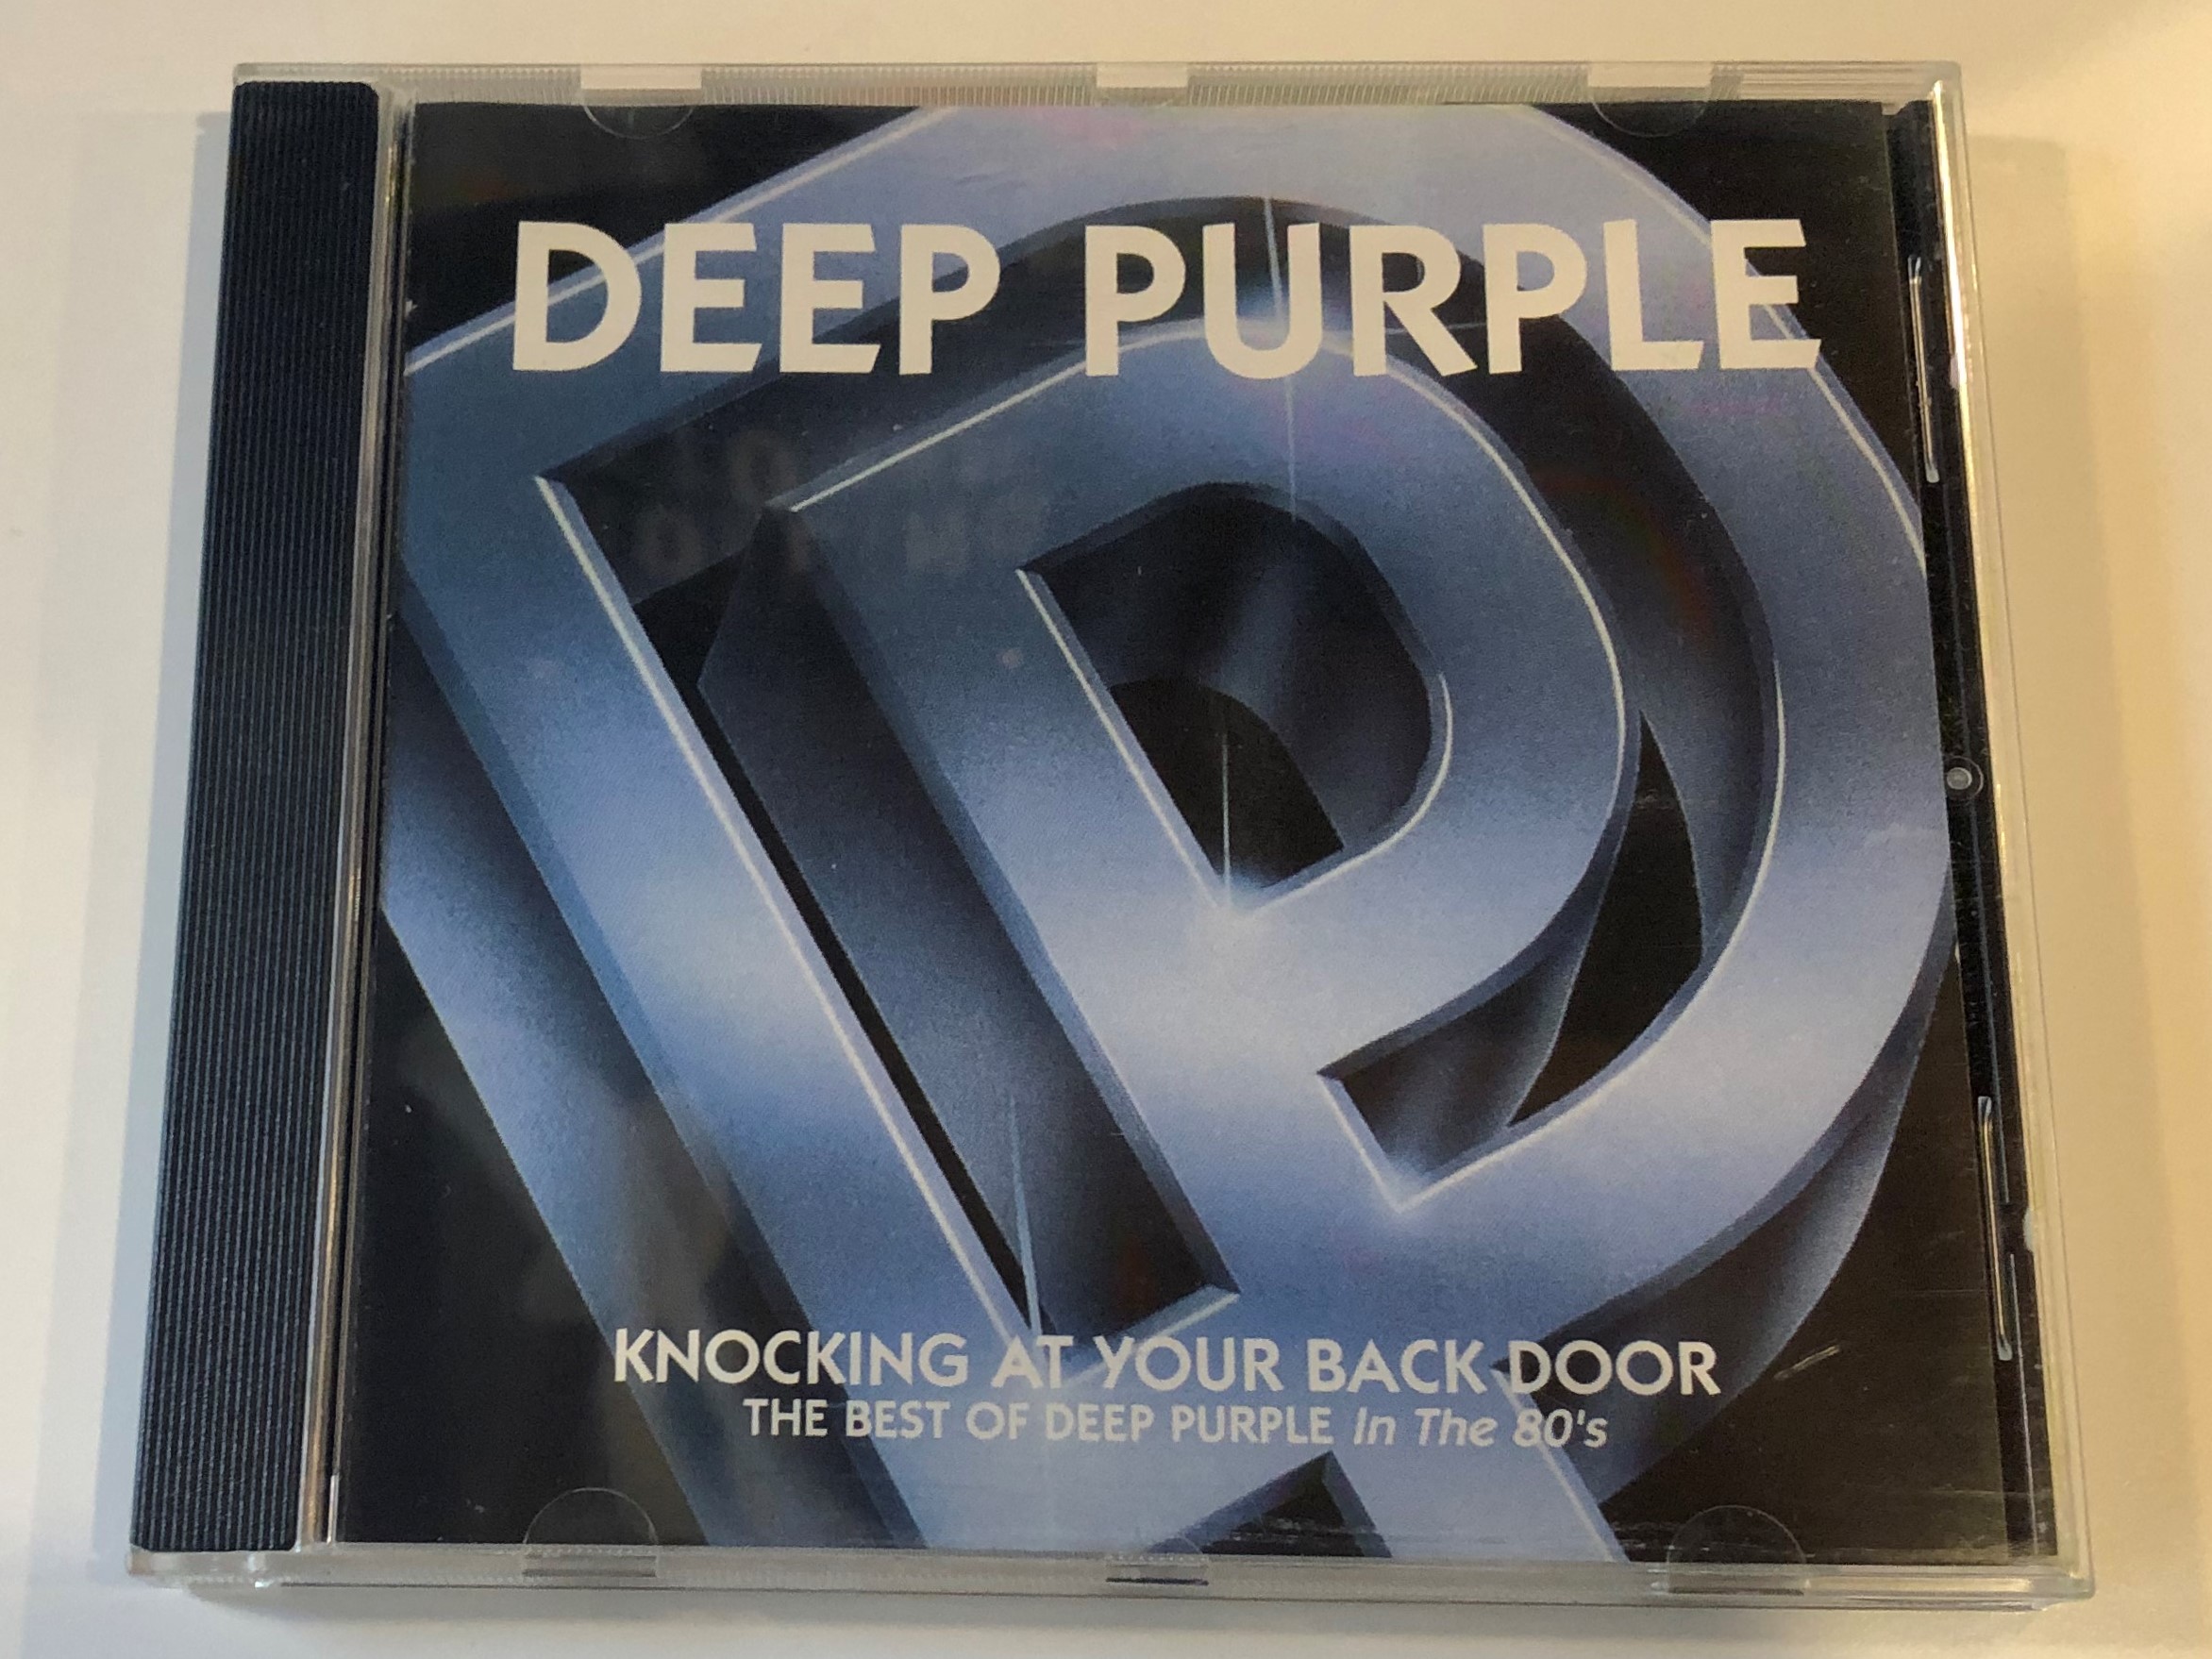 deep-purple-knocking-at-your-back-door-the-best-of-deep-purple-in-the-80-s-polygram-audio-cd-1991-511-438-2-1-.jpg